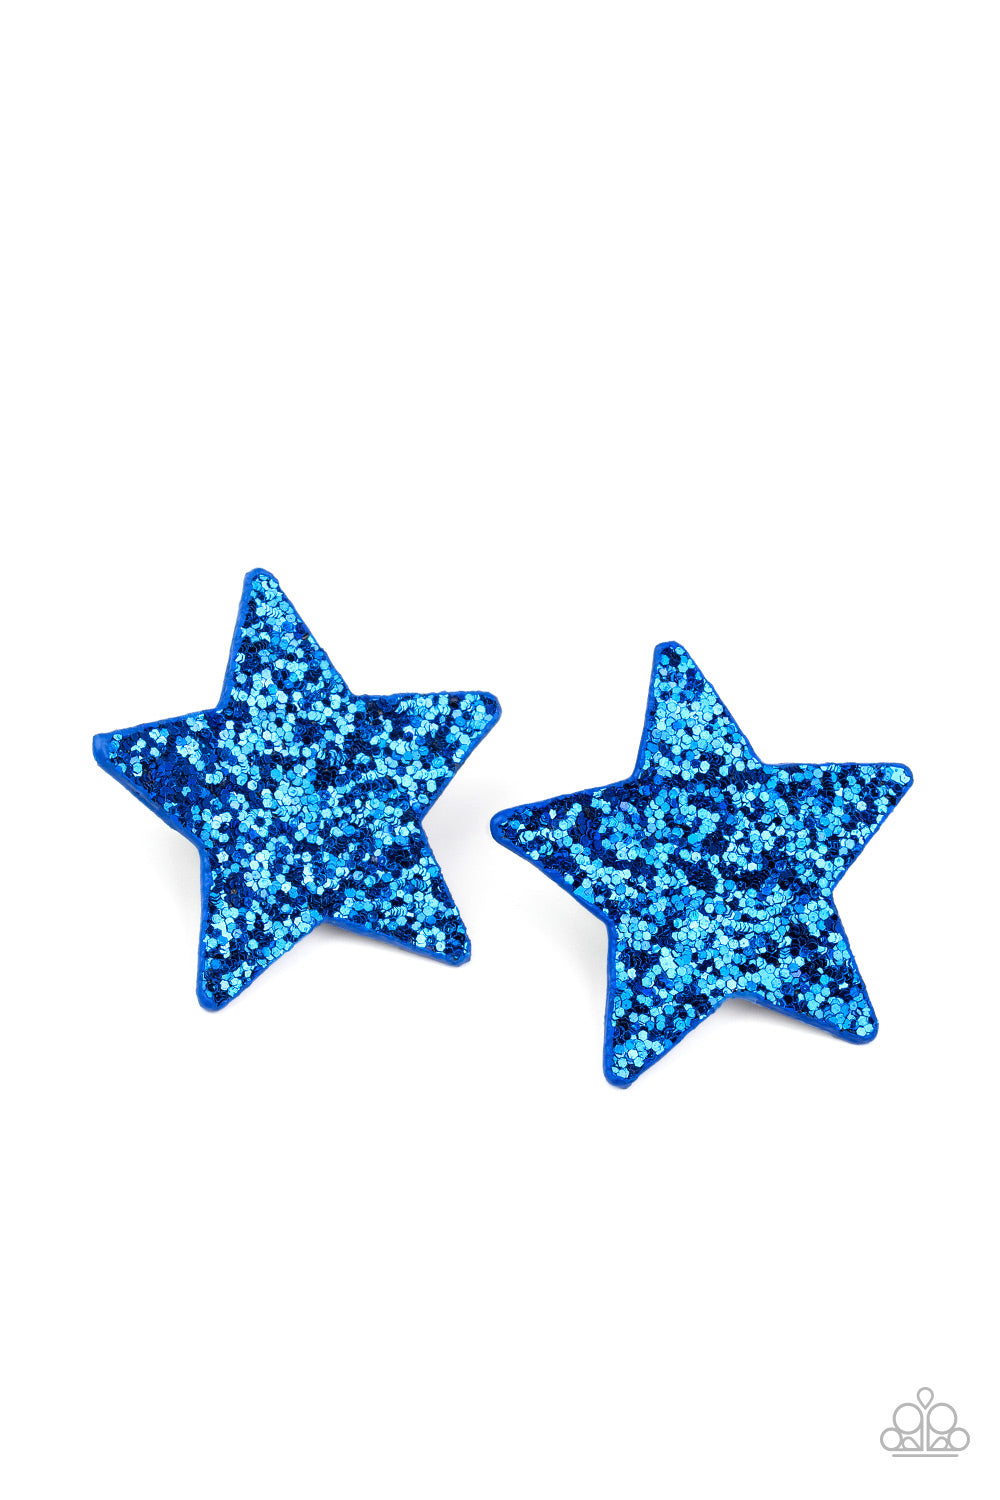 Star-Spangled Superstar - Blue